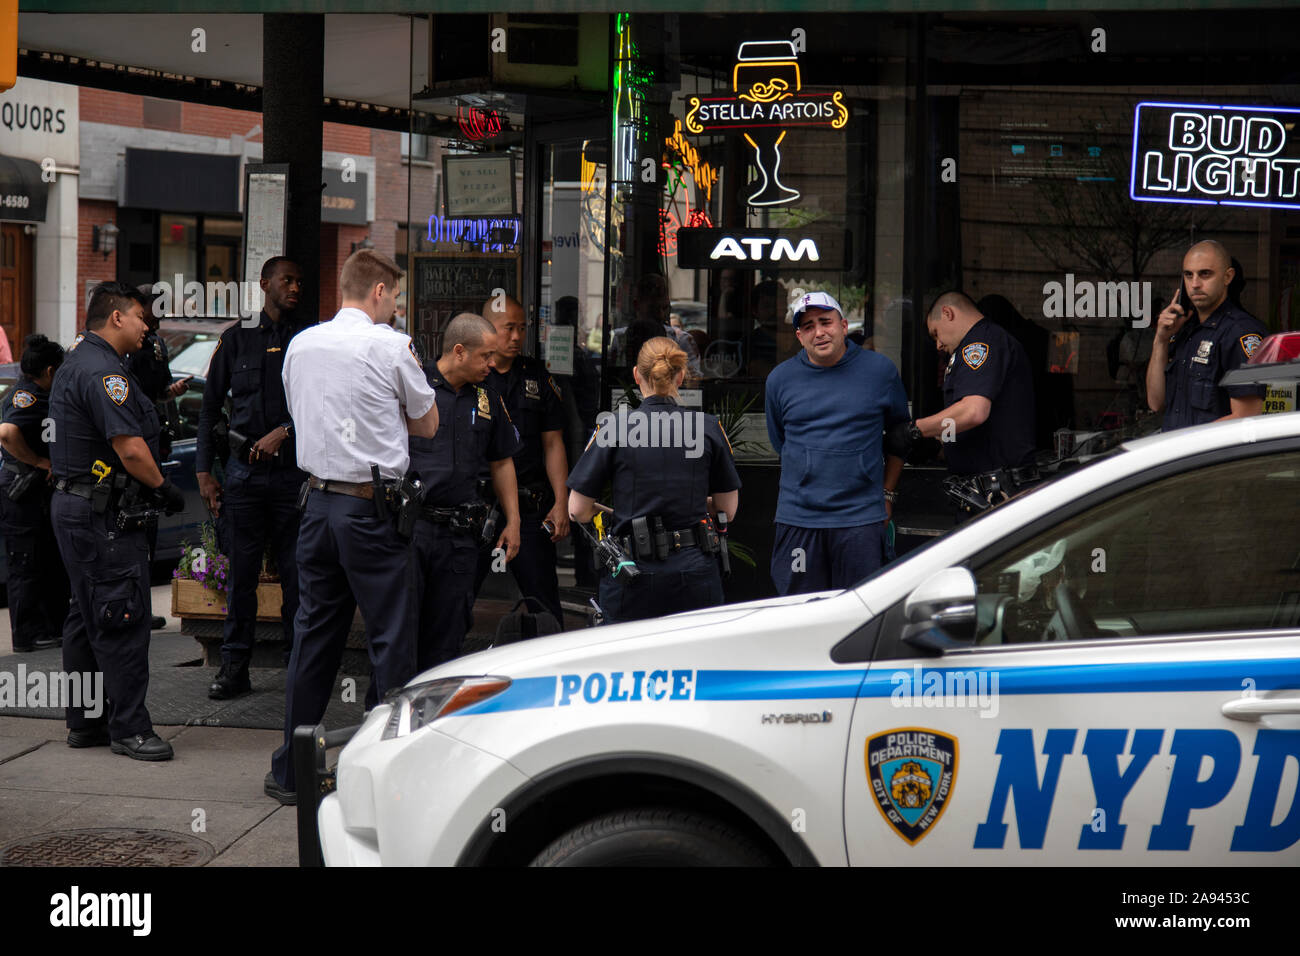 NYPD Police make an arrest on Street in Nolita, Manhattan, New York. Stock Photo